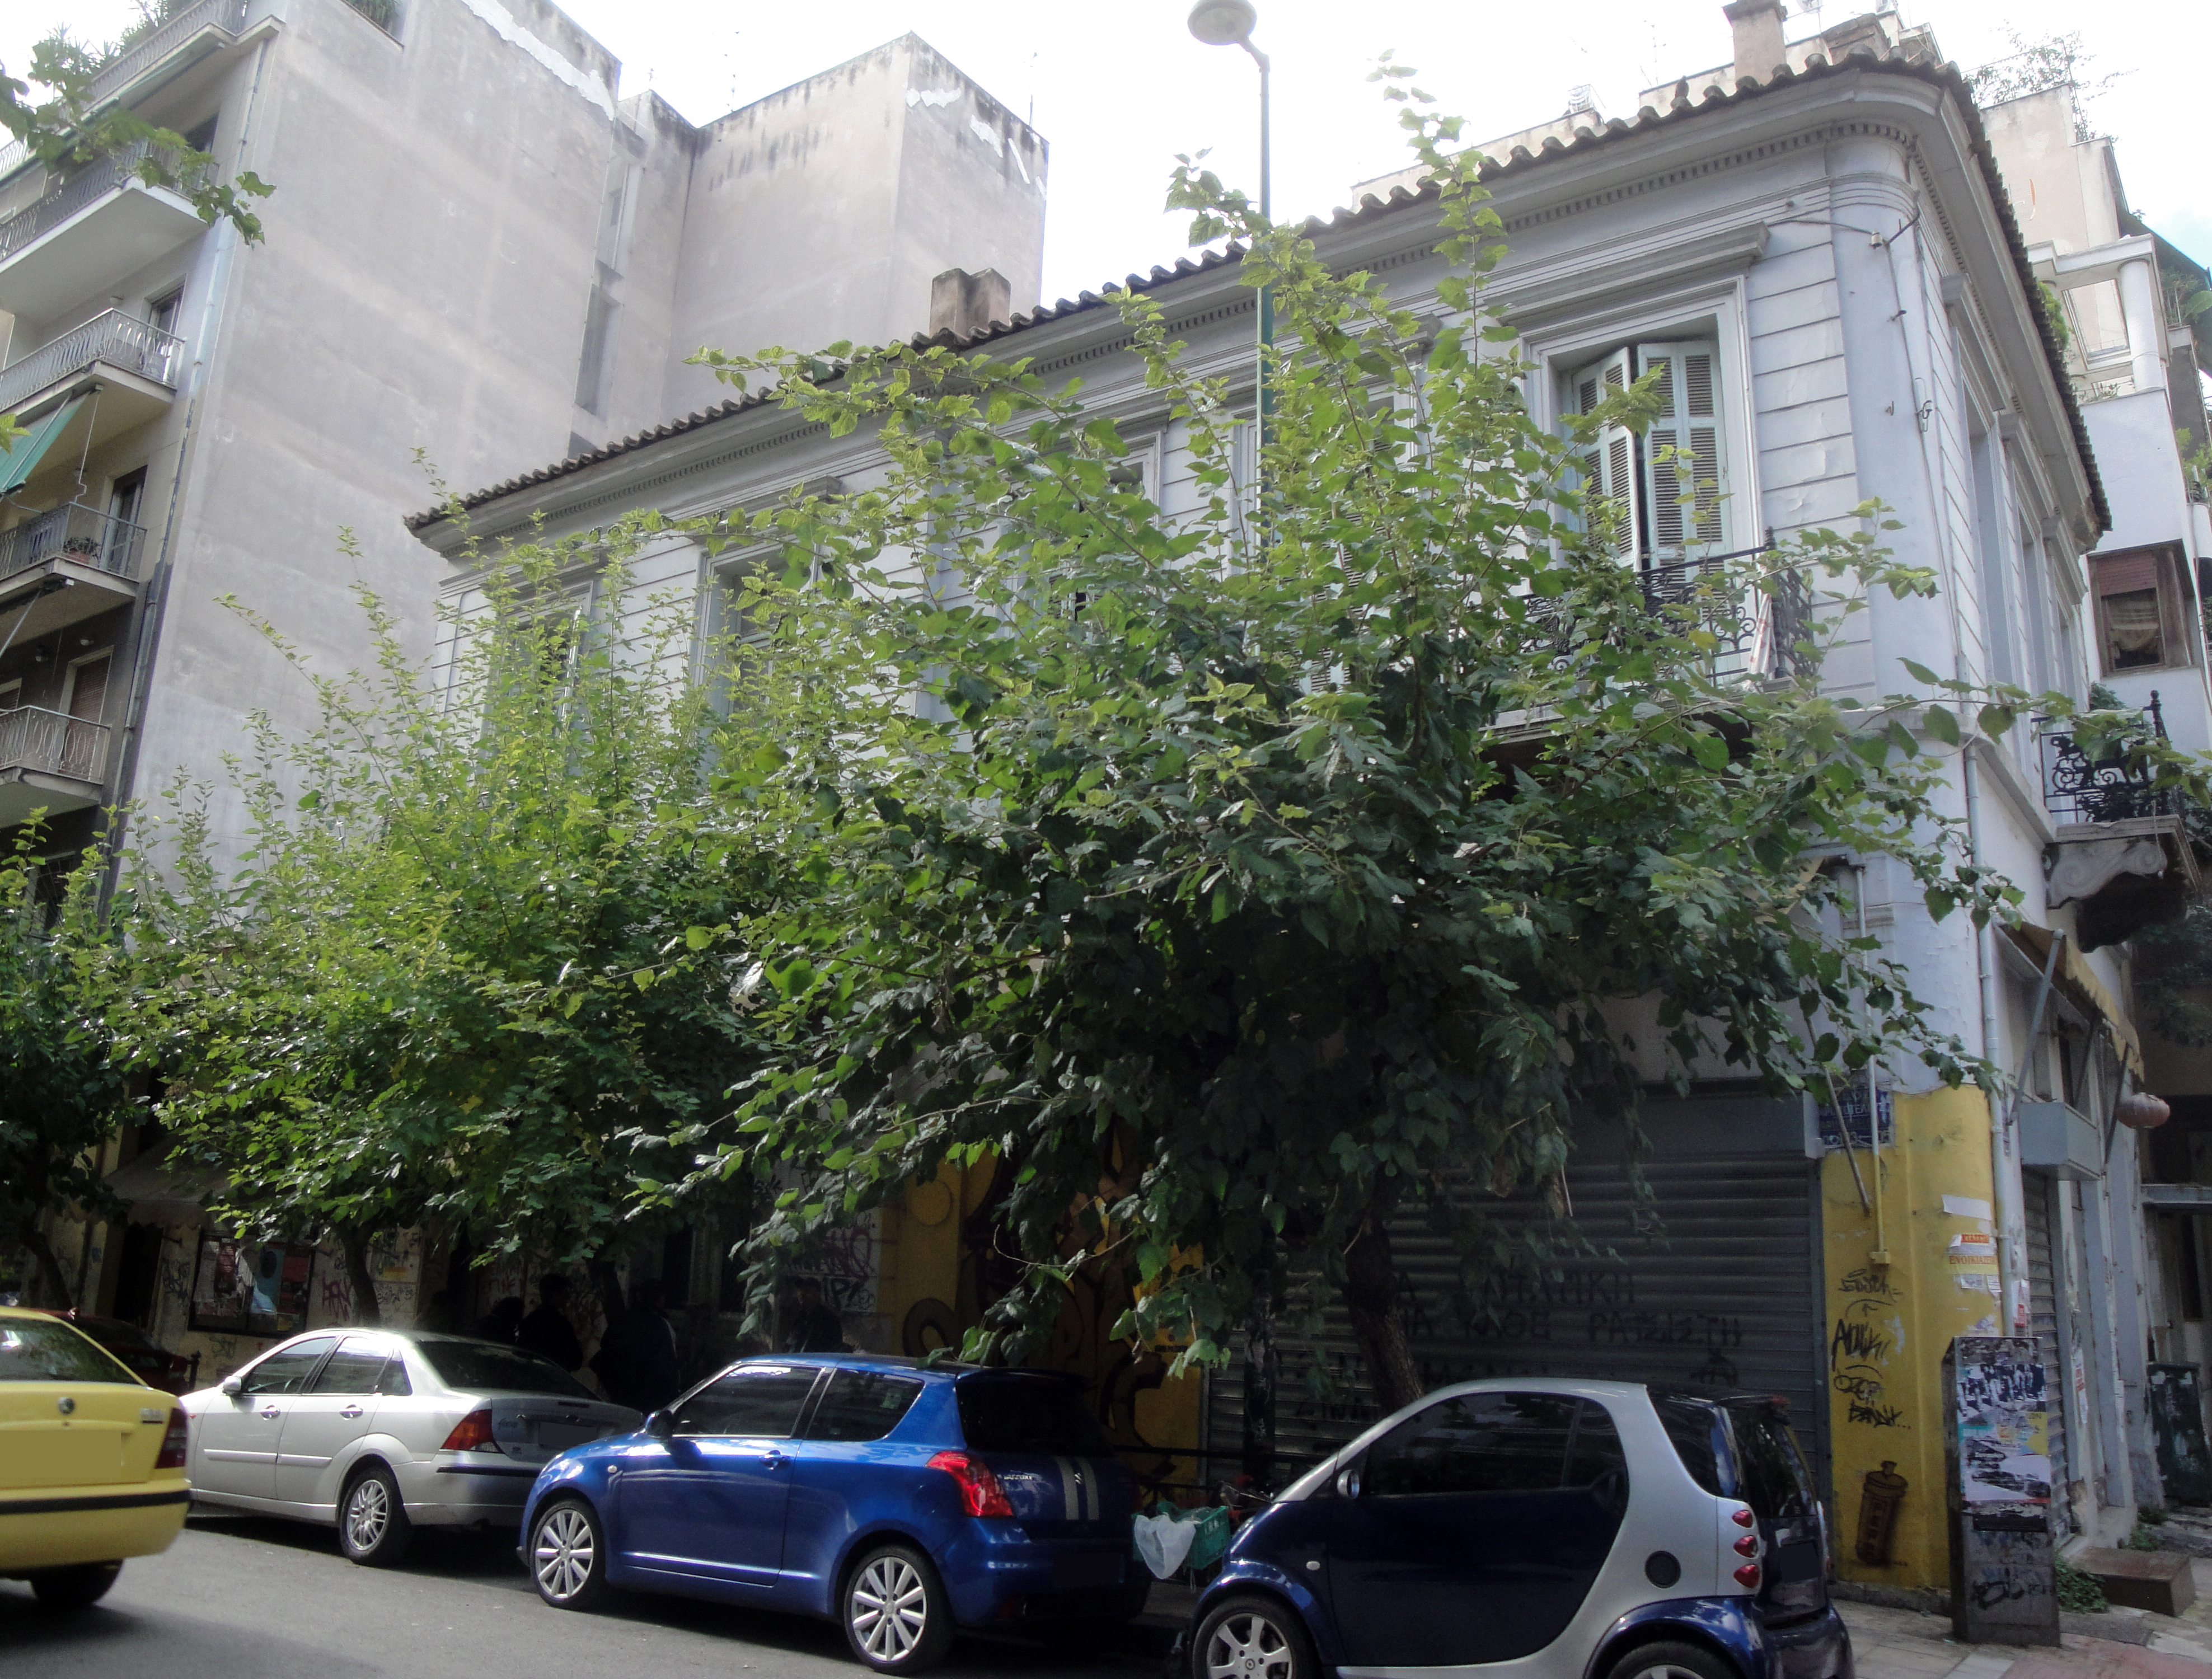 View of the façade on Aristotelous street